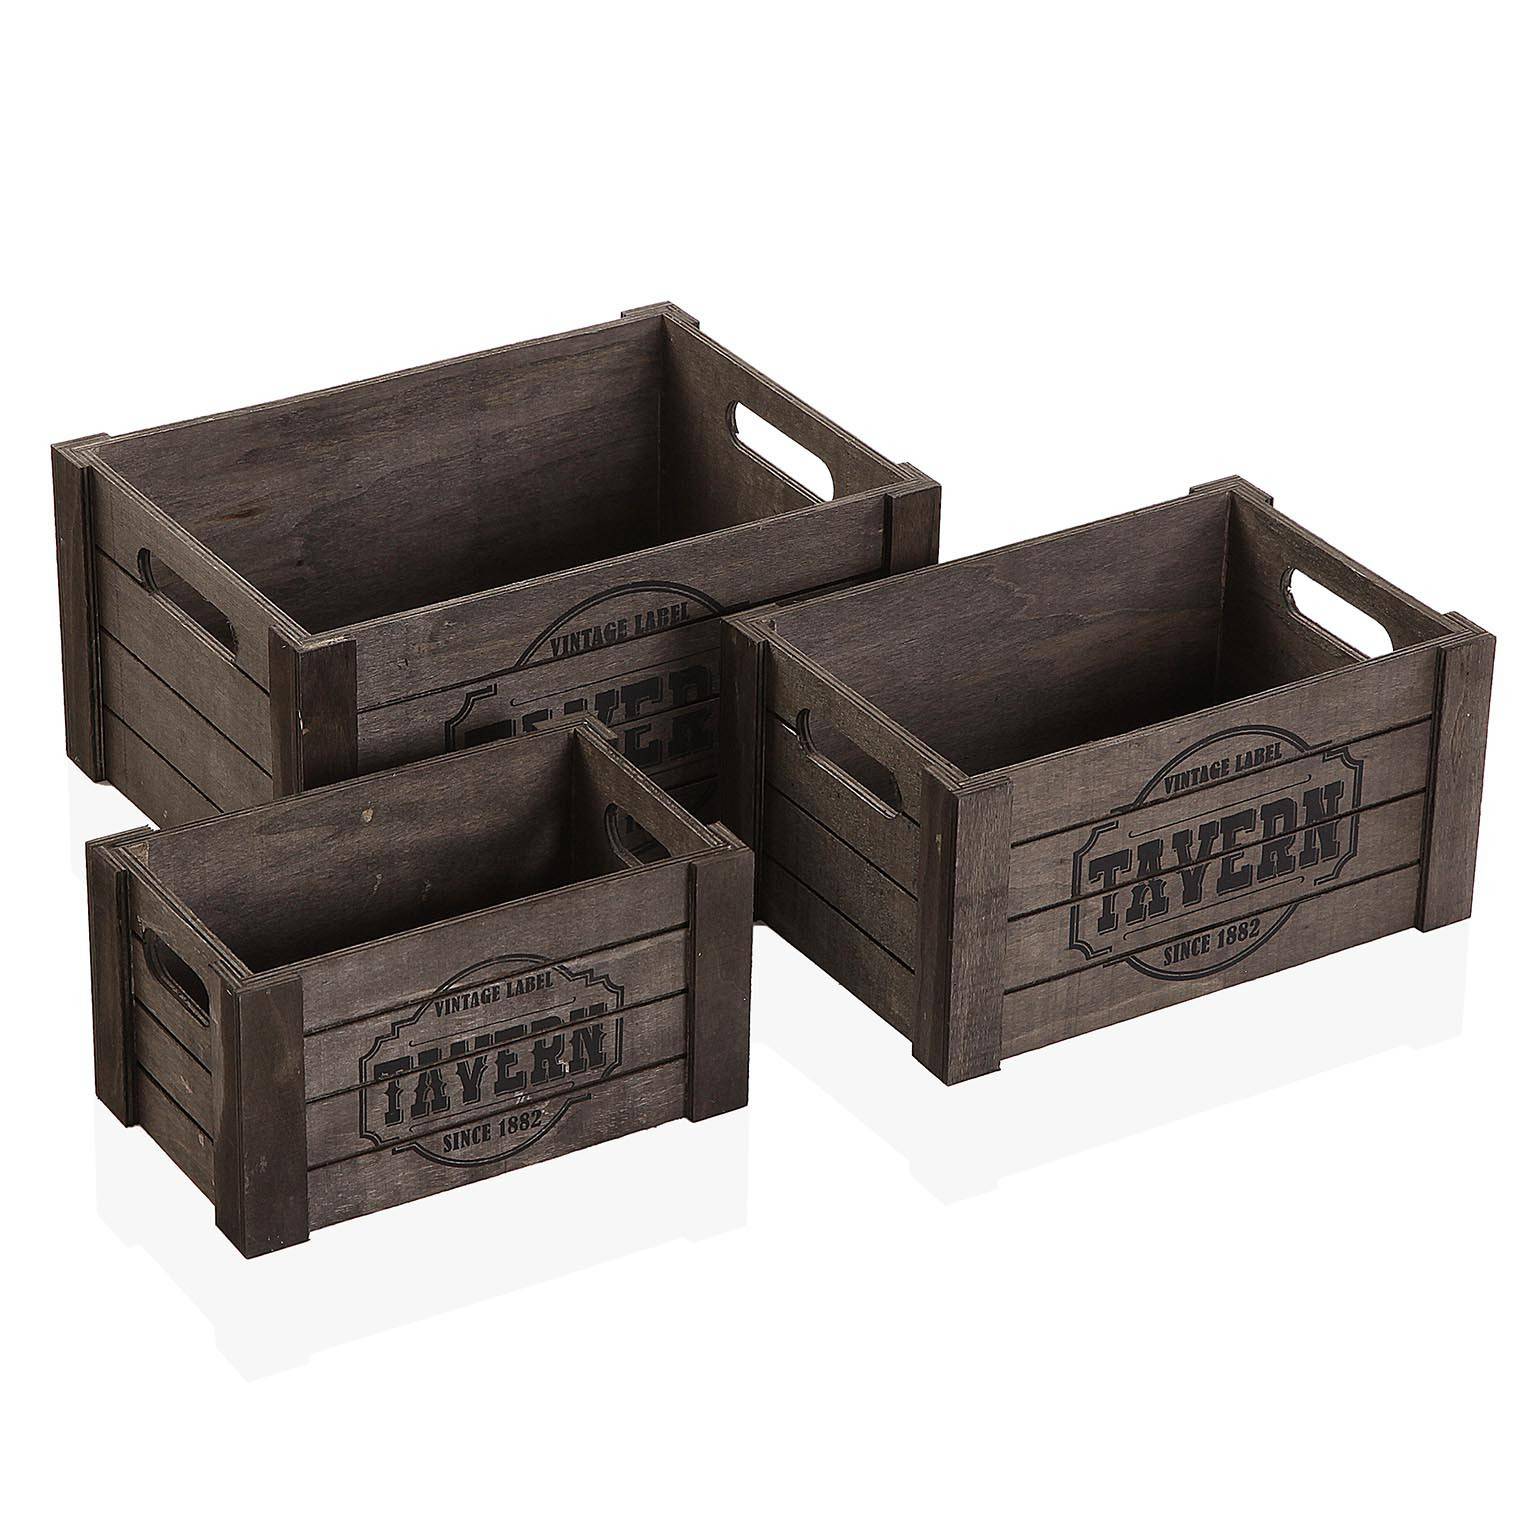 https://www.kamir.es/159193/set-3-cajas-vintage-madera-marron.jpg